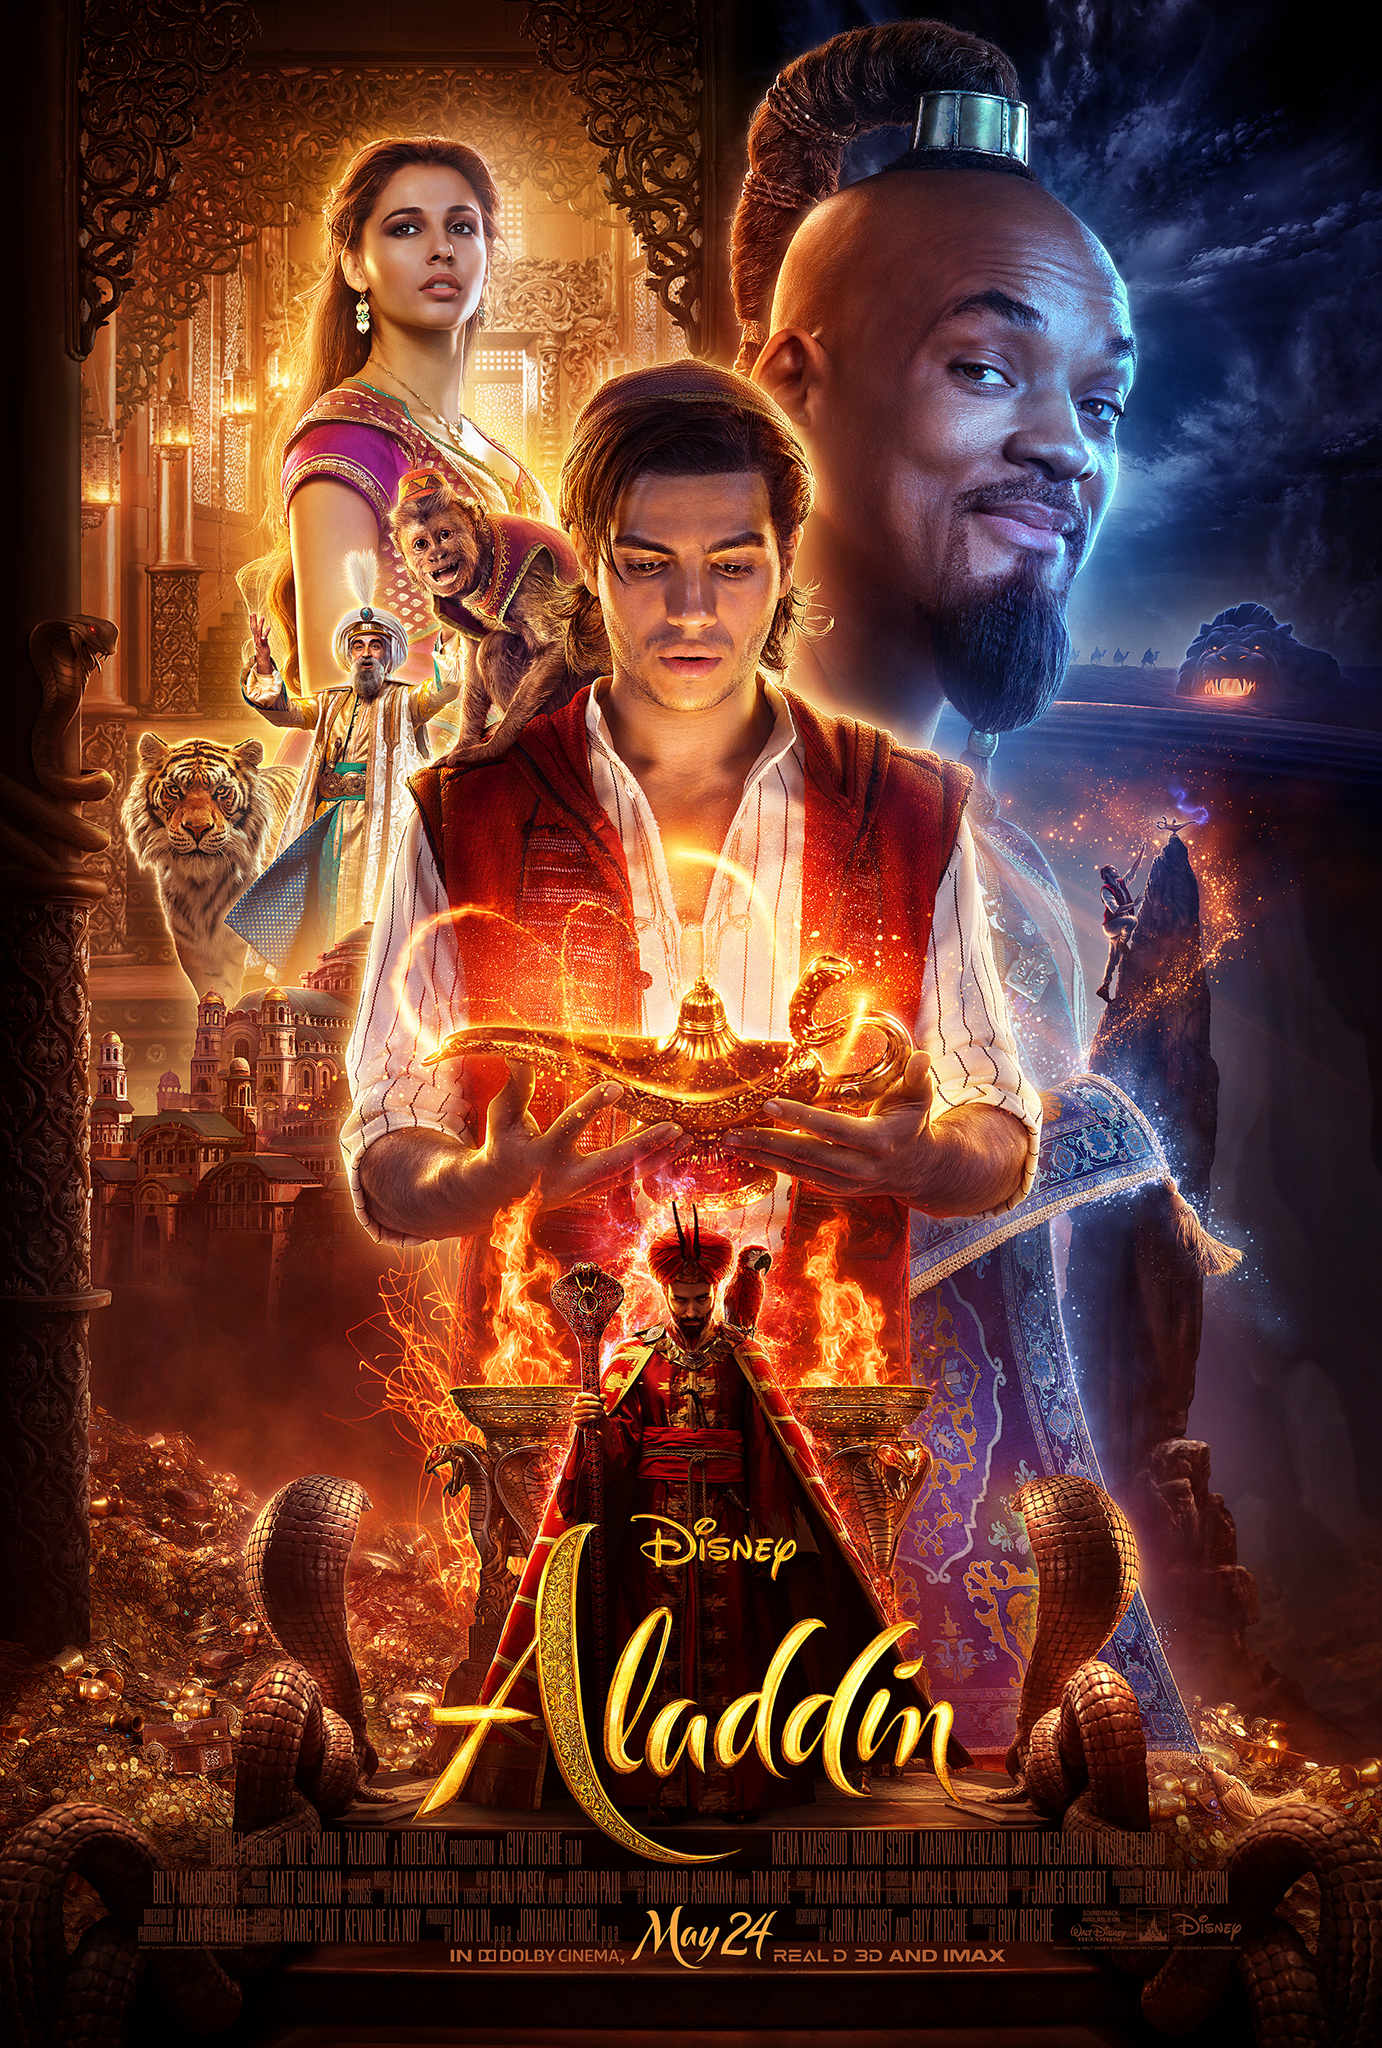 Aladdin aladin film romantis fantasi musika naomi scott disney 2019 2020 hollywood